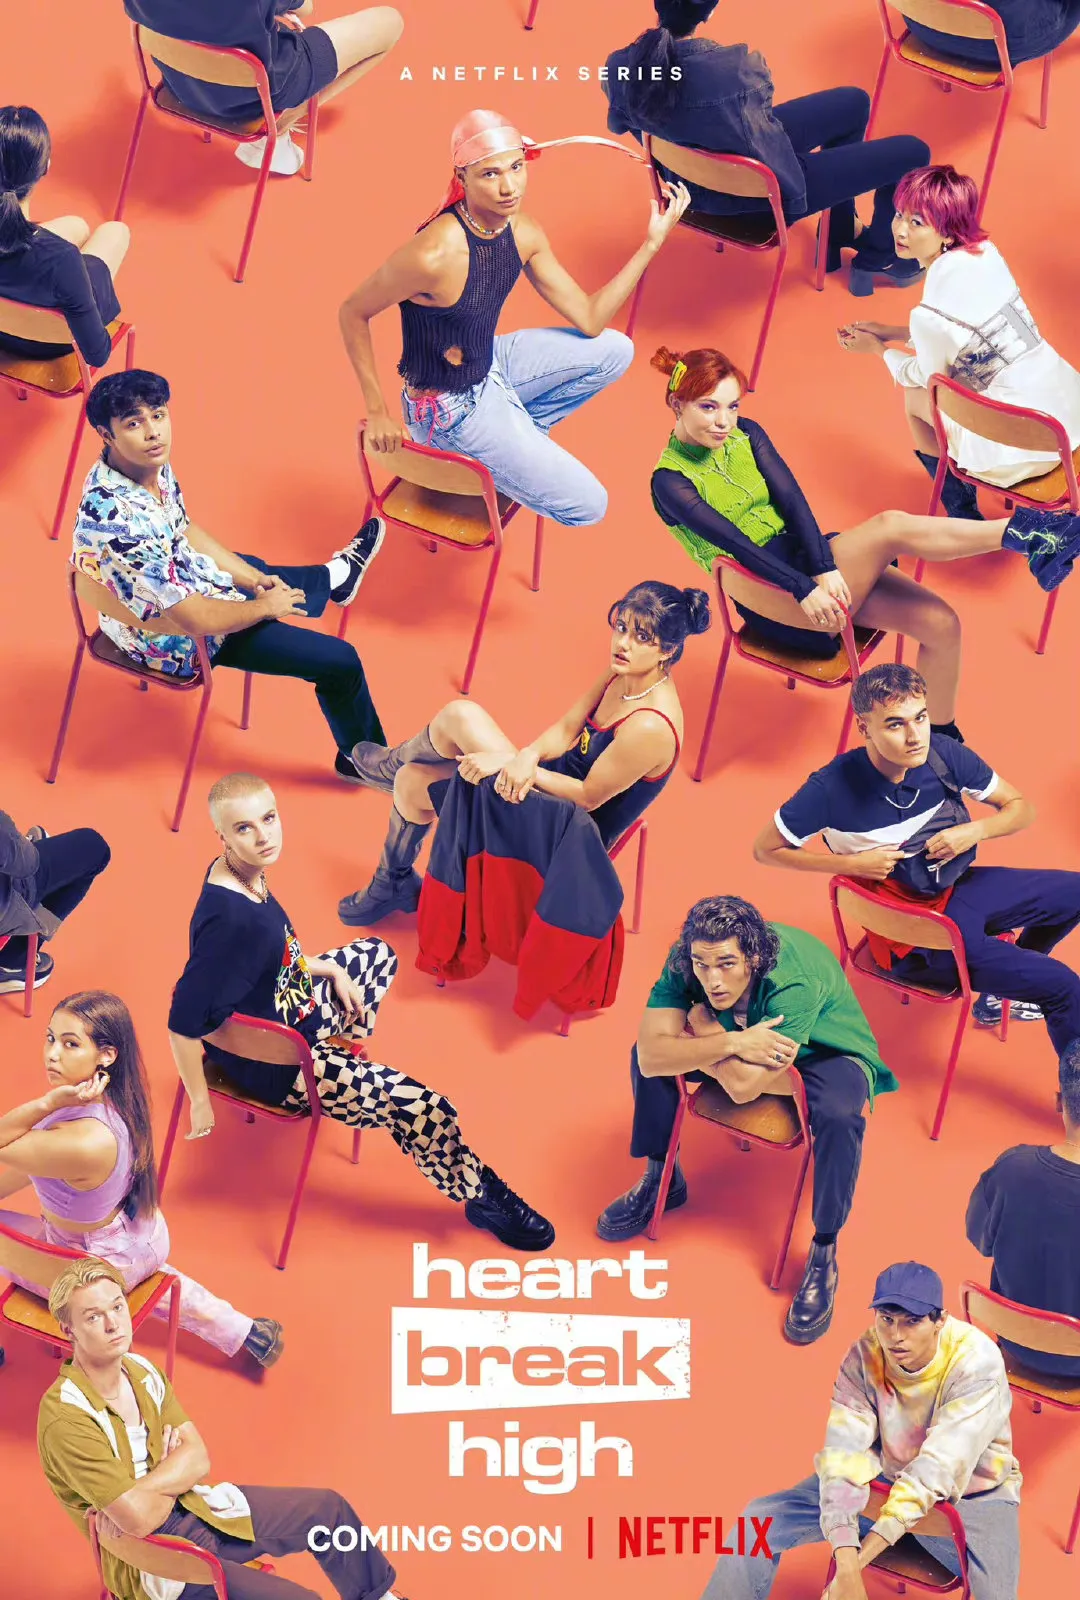 Netflix Announces Renewal of Youth School Series 'Heartbreak High Season 2' | FMV6